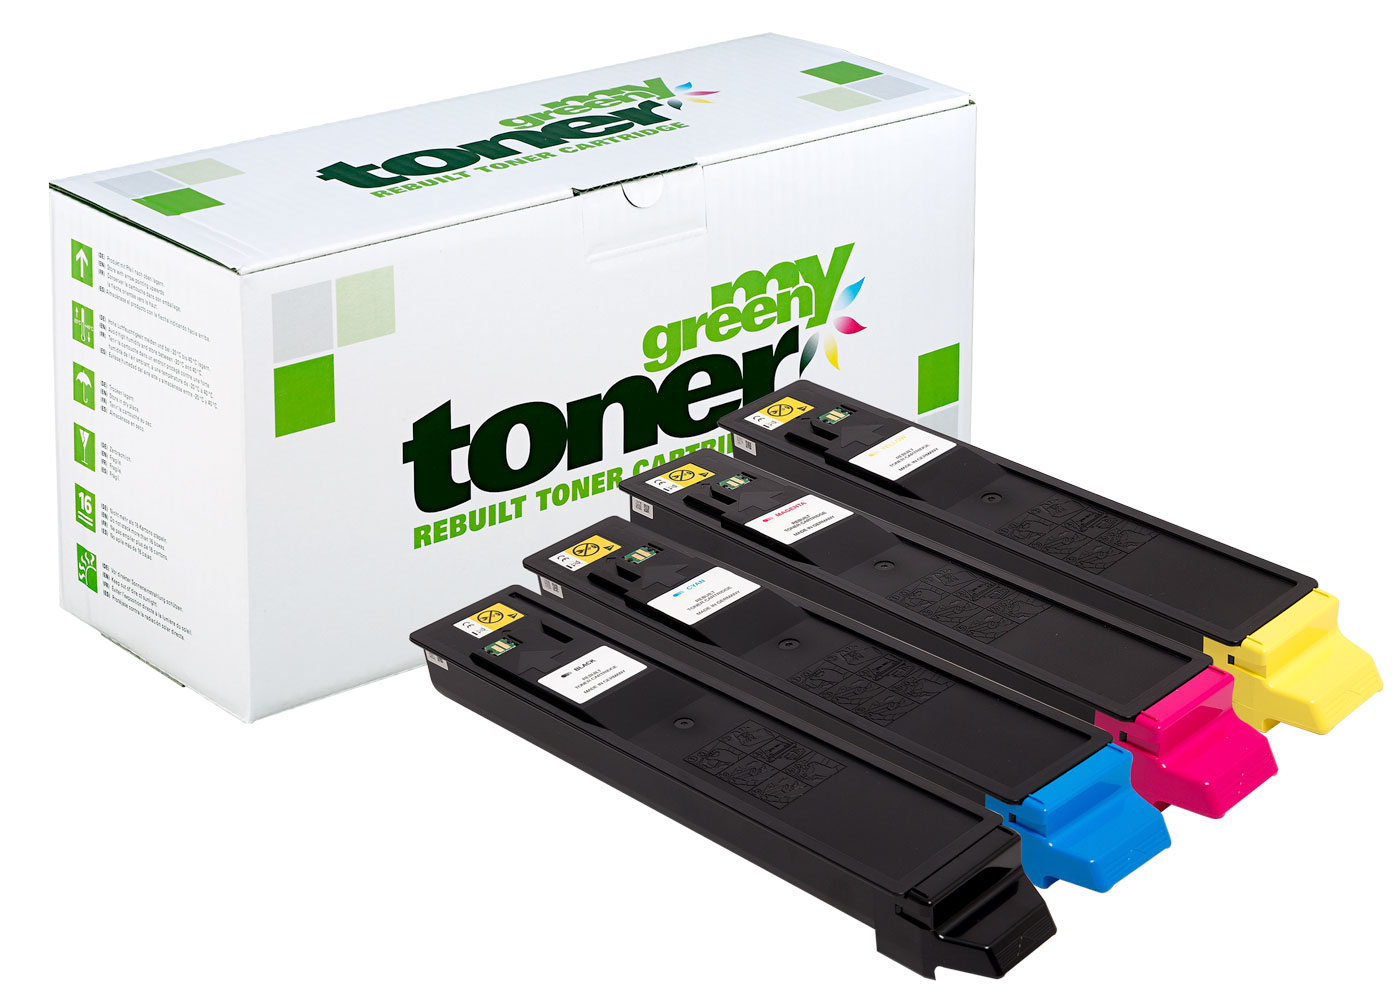 Rebuilt toner cartridge for Kyocera ECOSYS M8124/8130